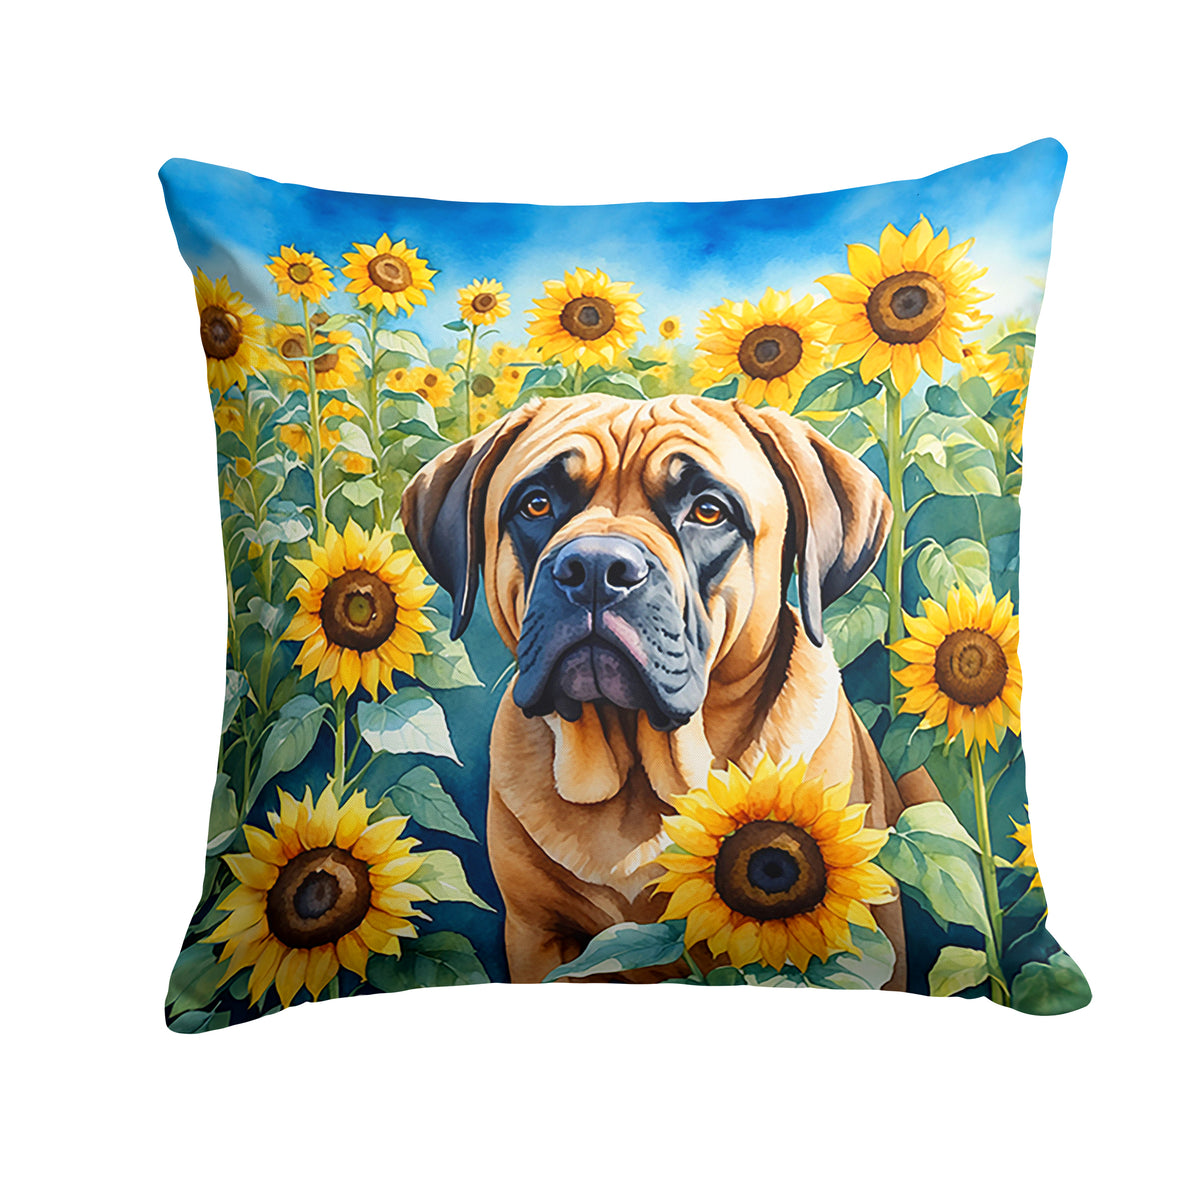 Buy this Mastiff in Sunflowers Throw Pillow